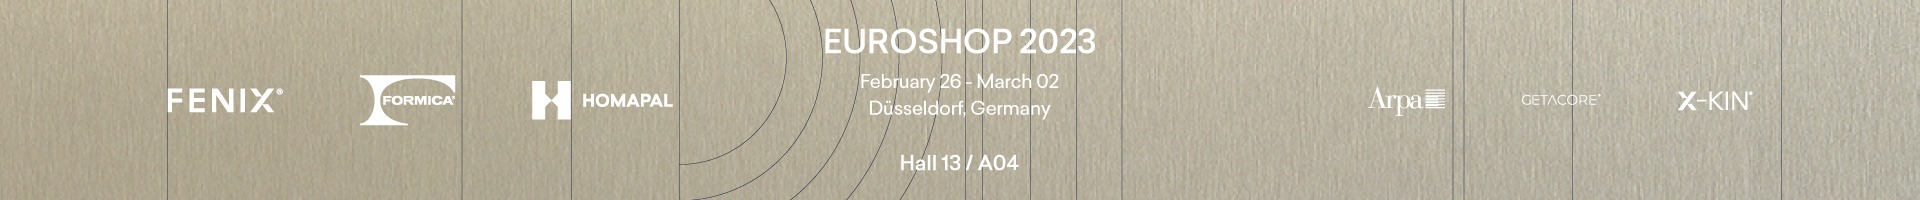 Материалы FENIX<sup>®</sup>, Formica<sup>®</sup> и Homapal<sup>®</sup> в проекте Surfaces with a view на выставке EuroShop 2023